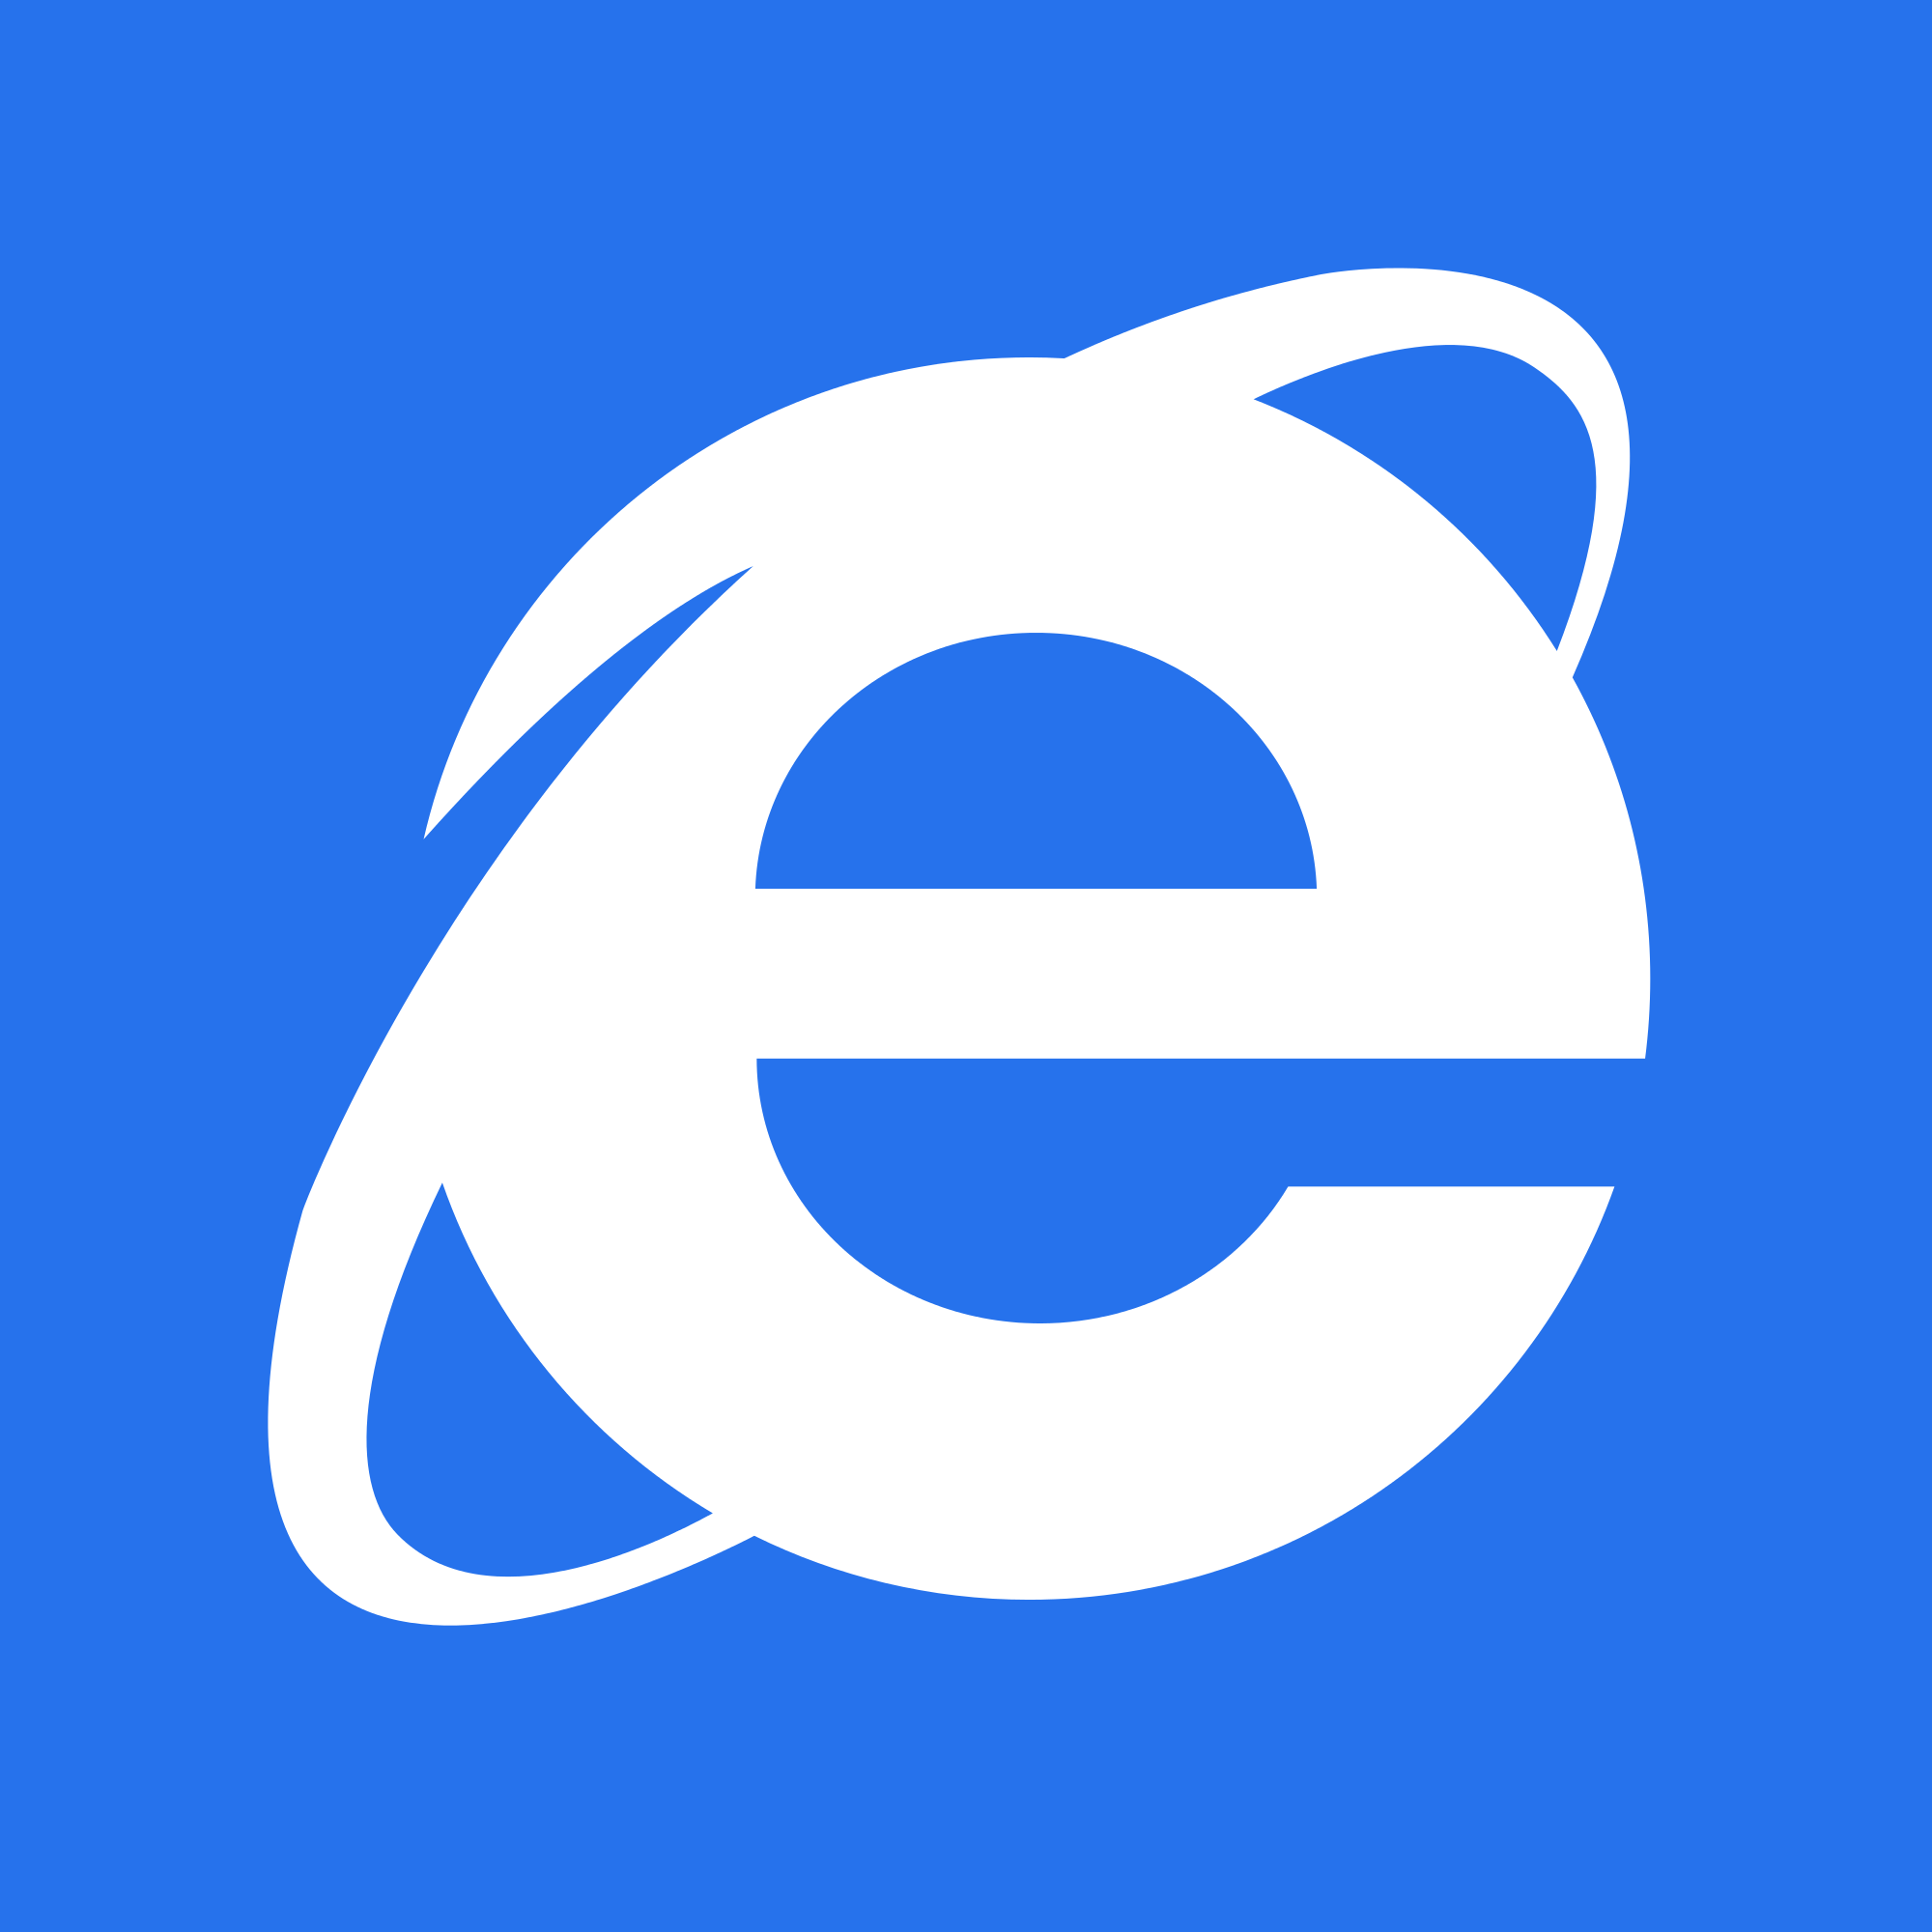 Internet Explorer Logo - Internet Explorer 10 start icon.svg